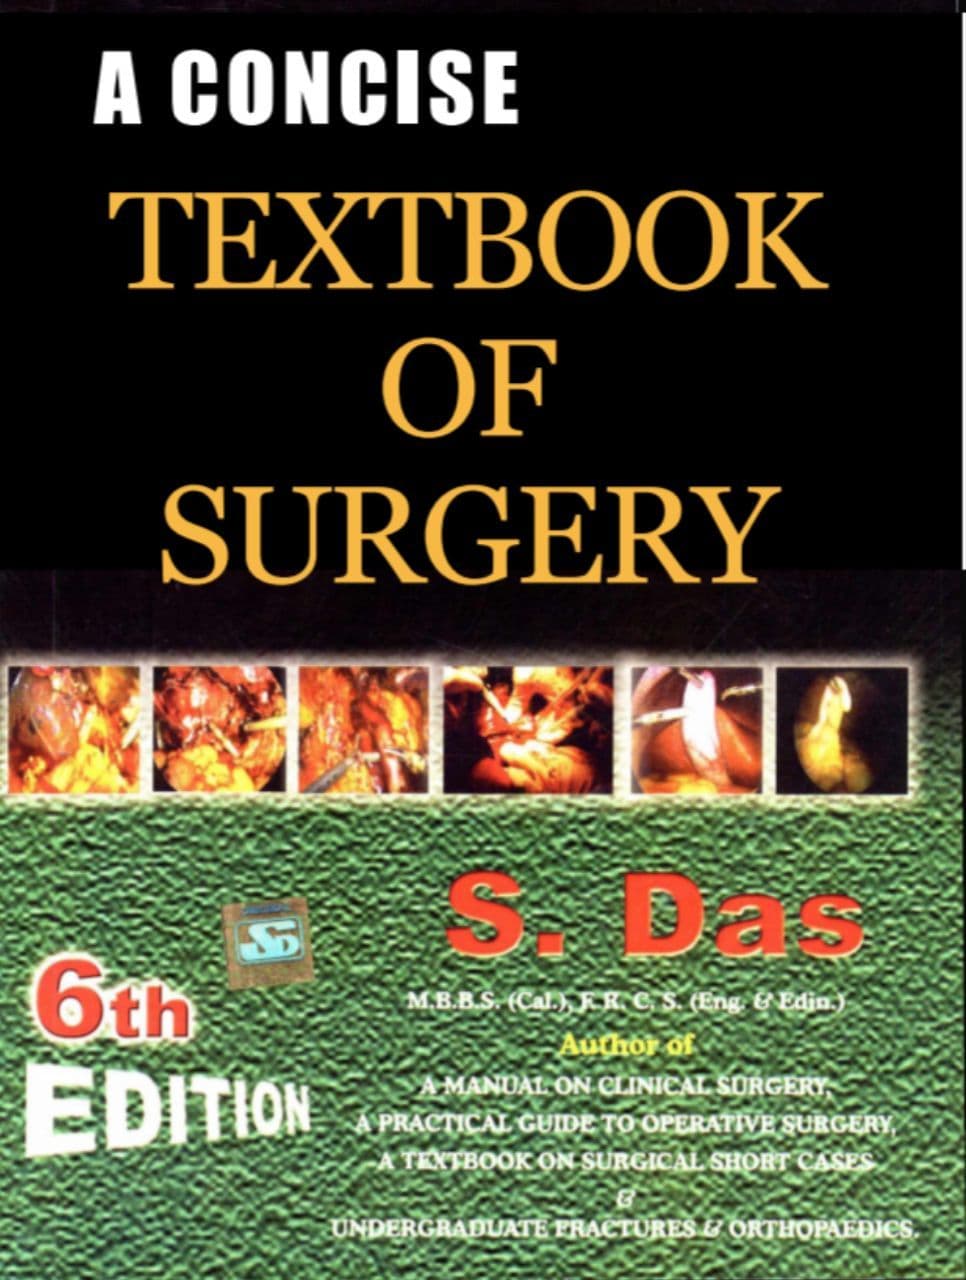 general surgery dissertation pdf